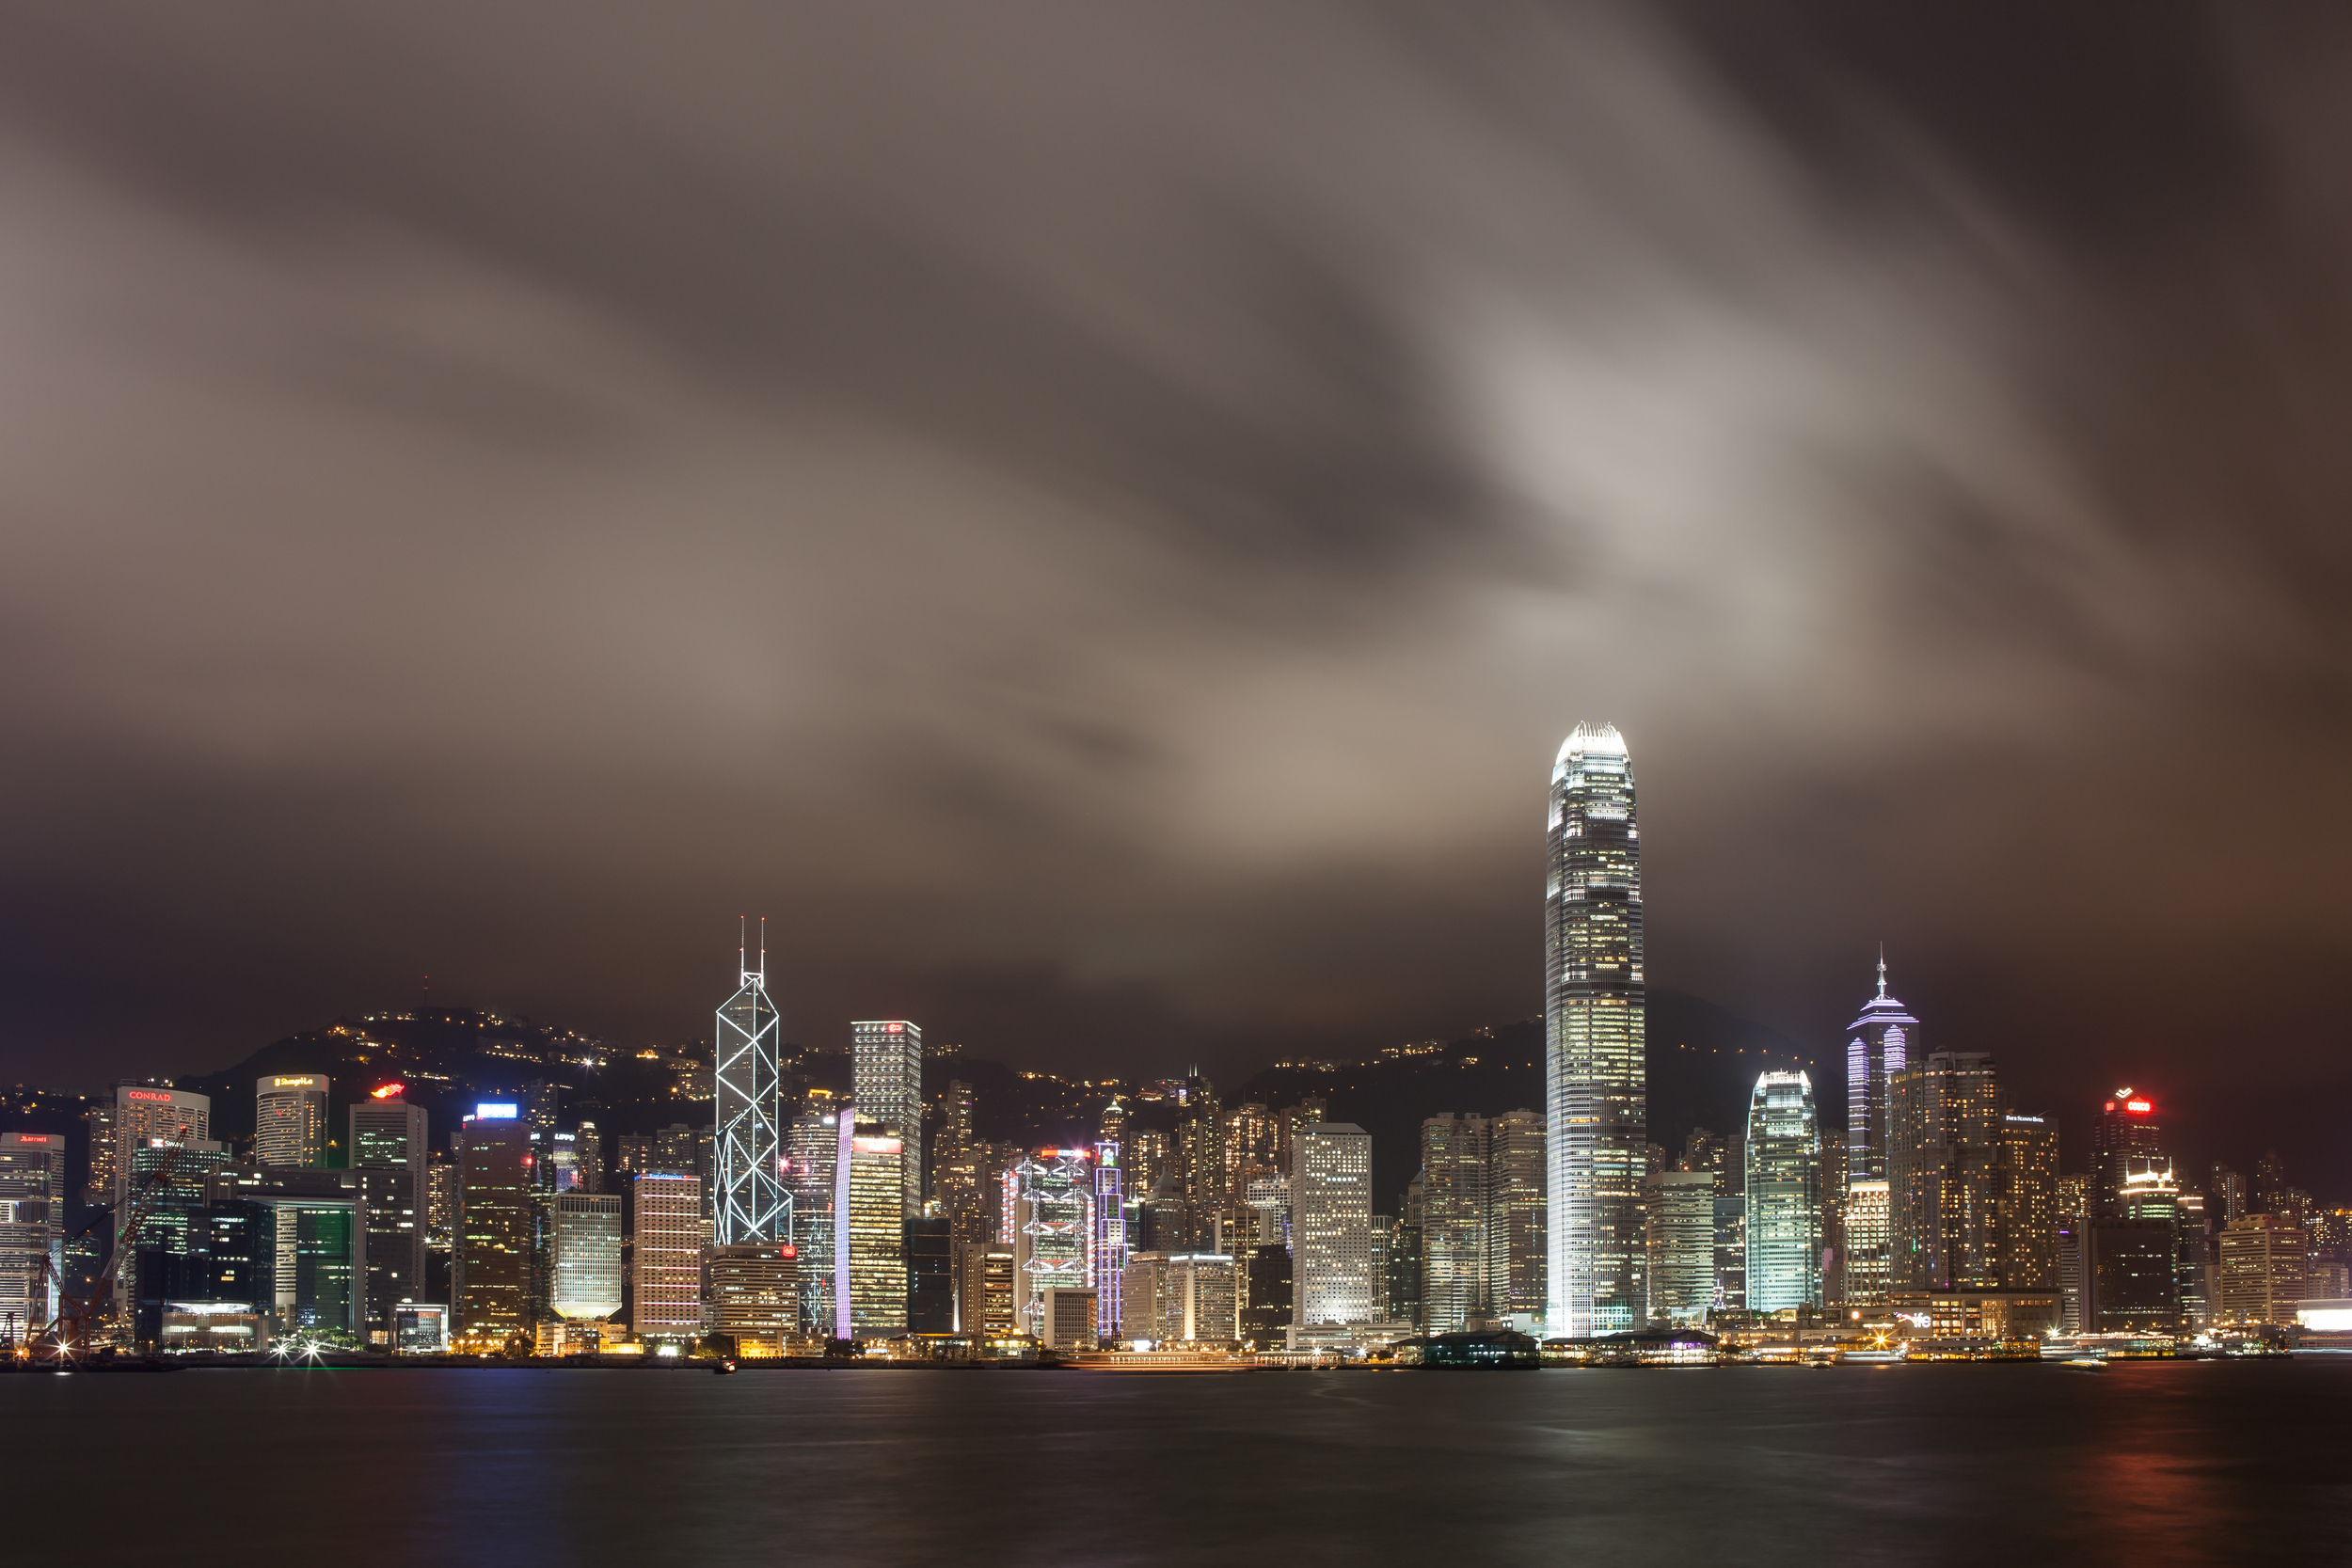 Kowloon Harbour at night-7276.jpg